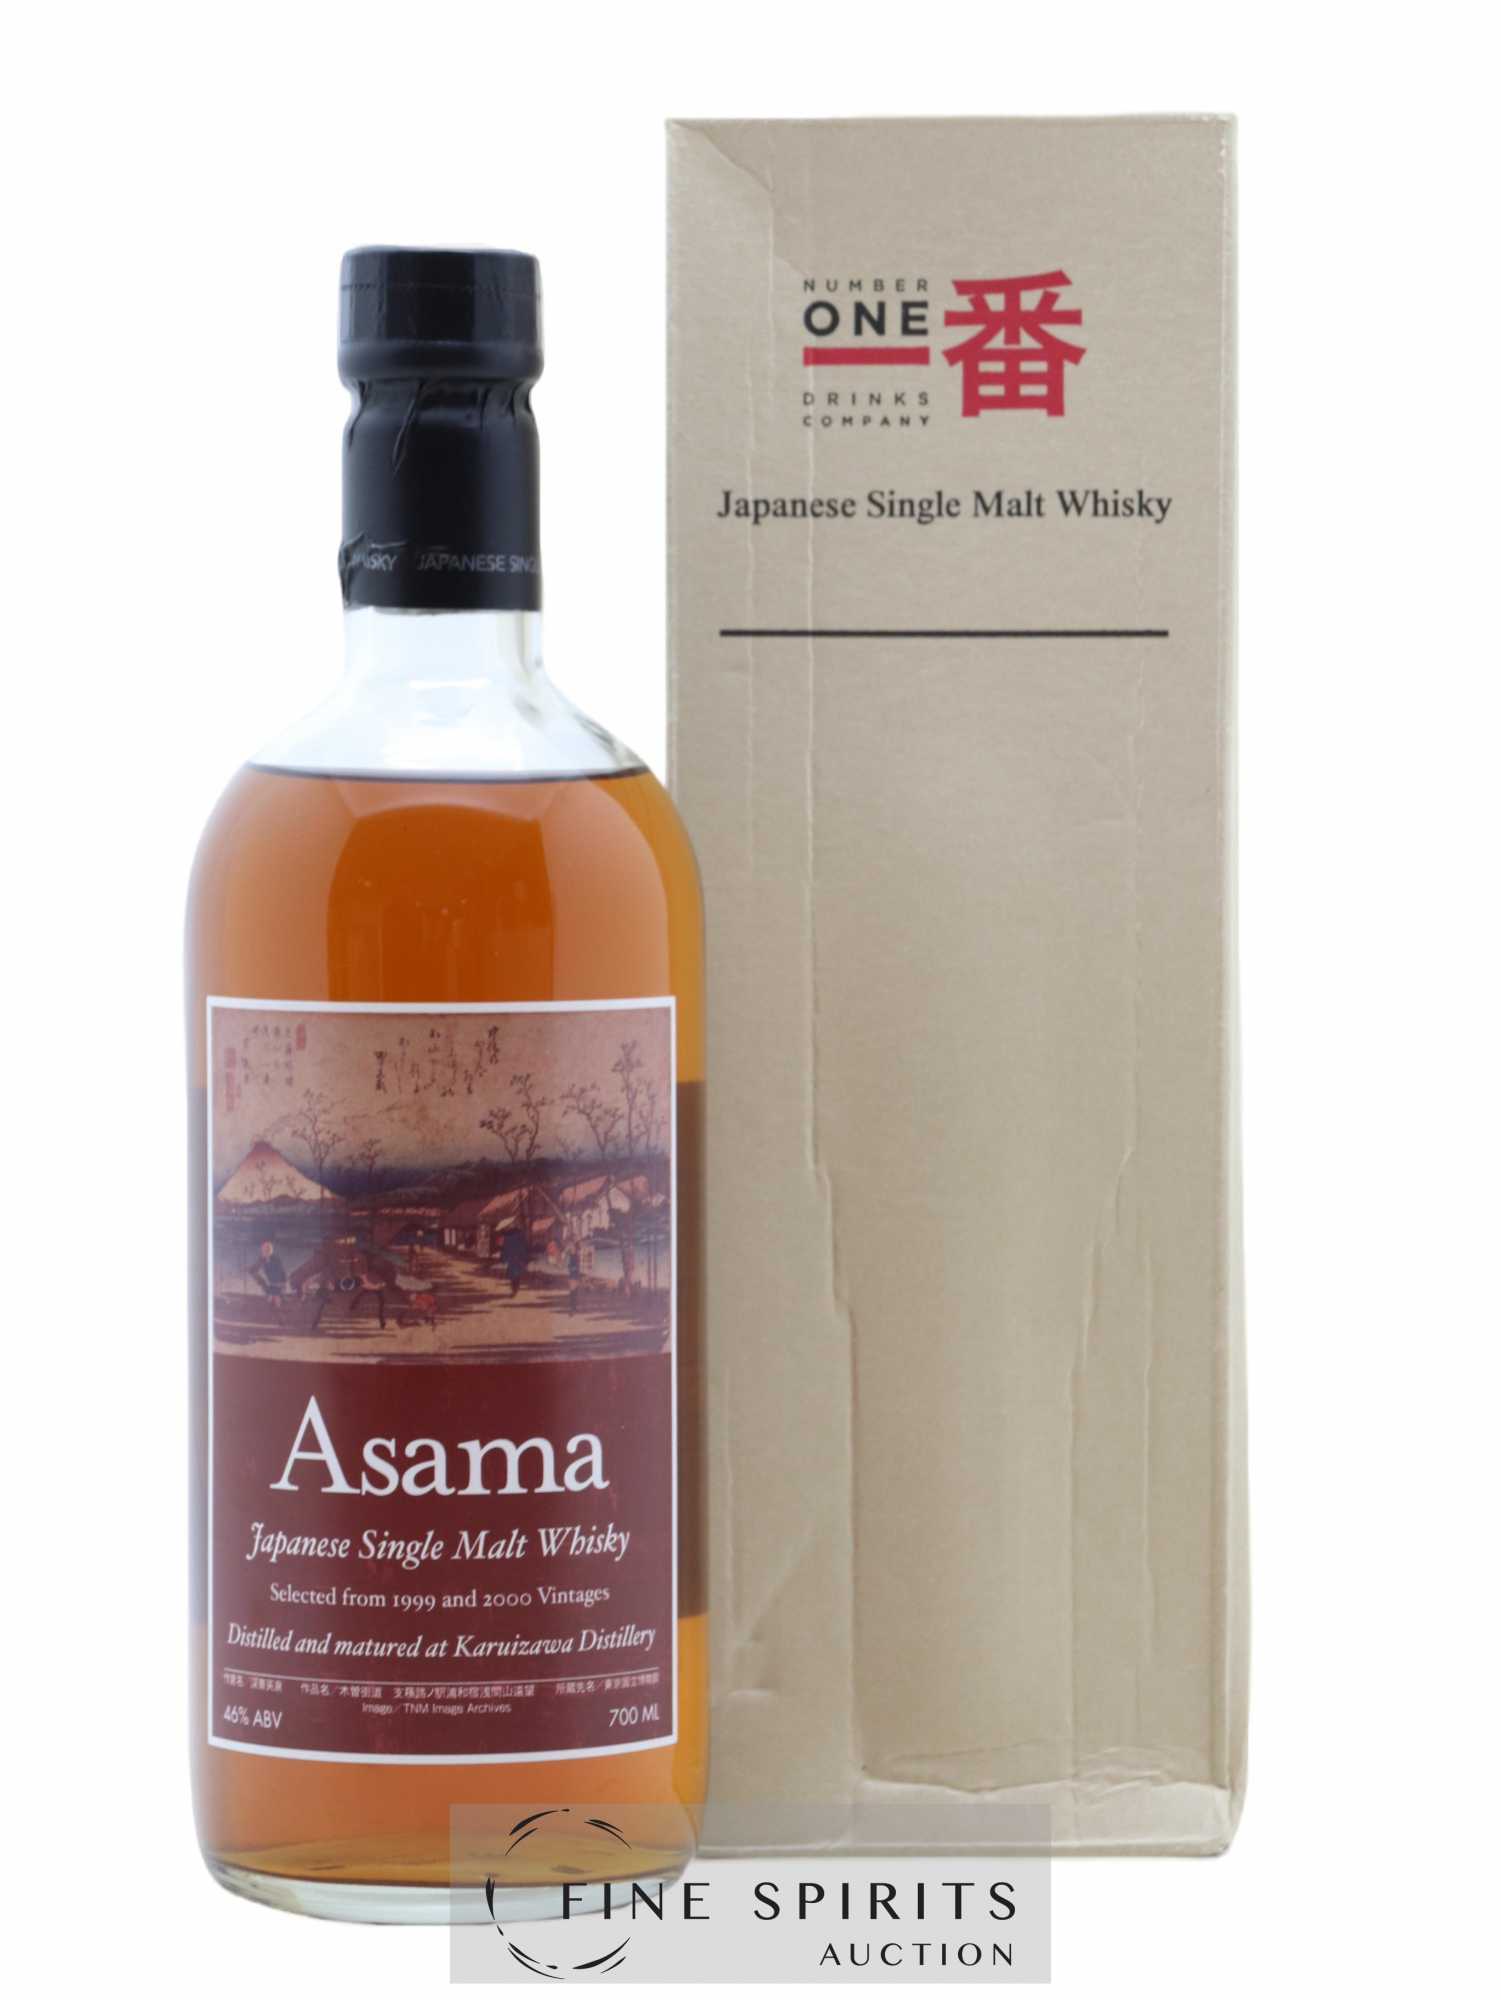 Asama Number One Drinks Karuizawa 1999 - 2000 bottled 2012 